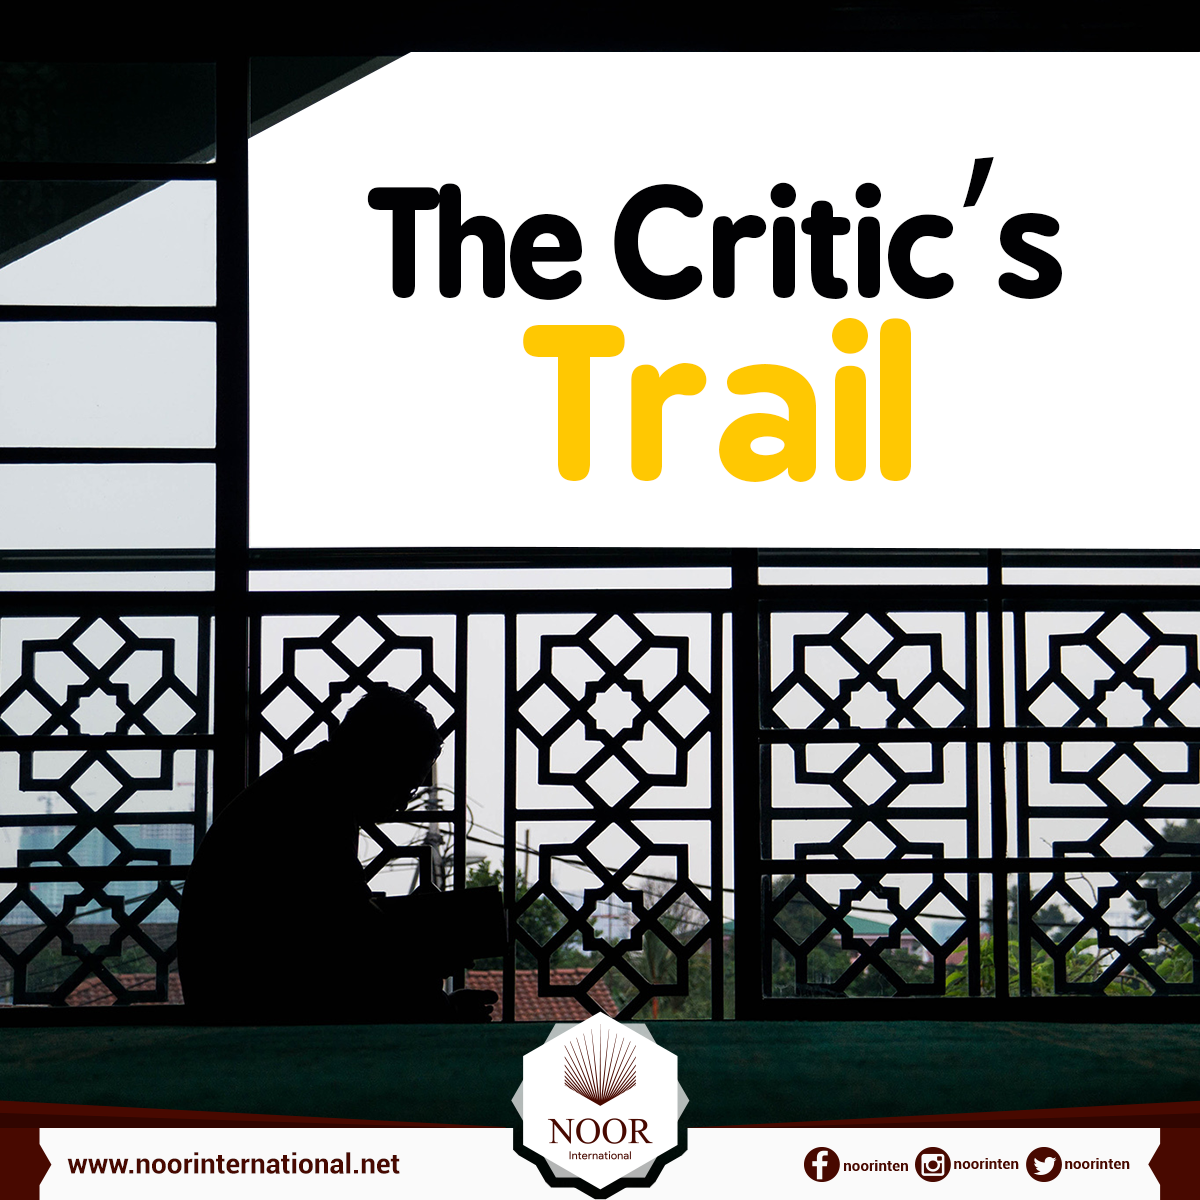 The Critic’s Trail